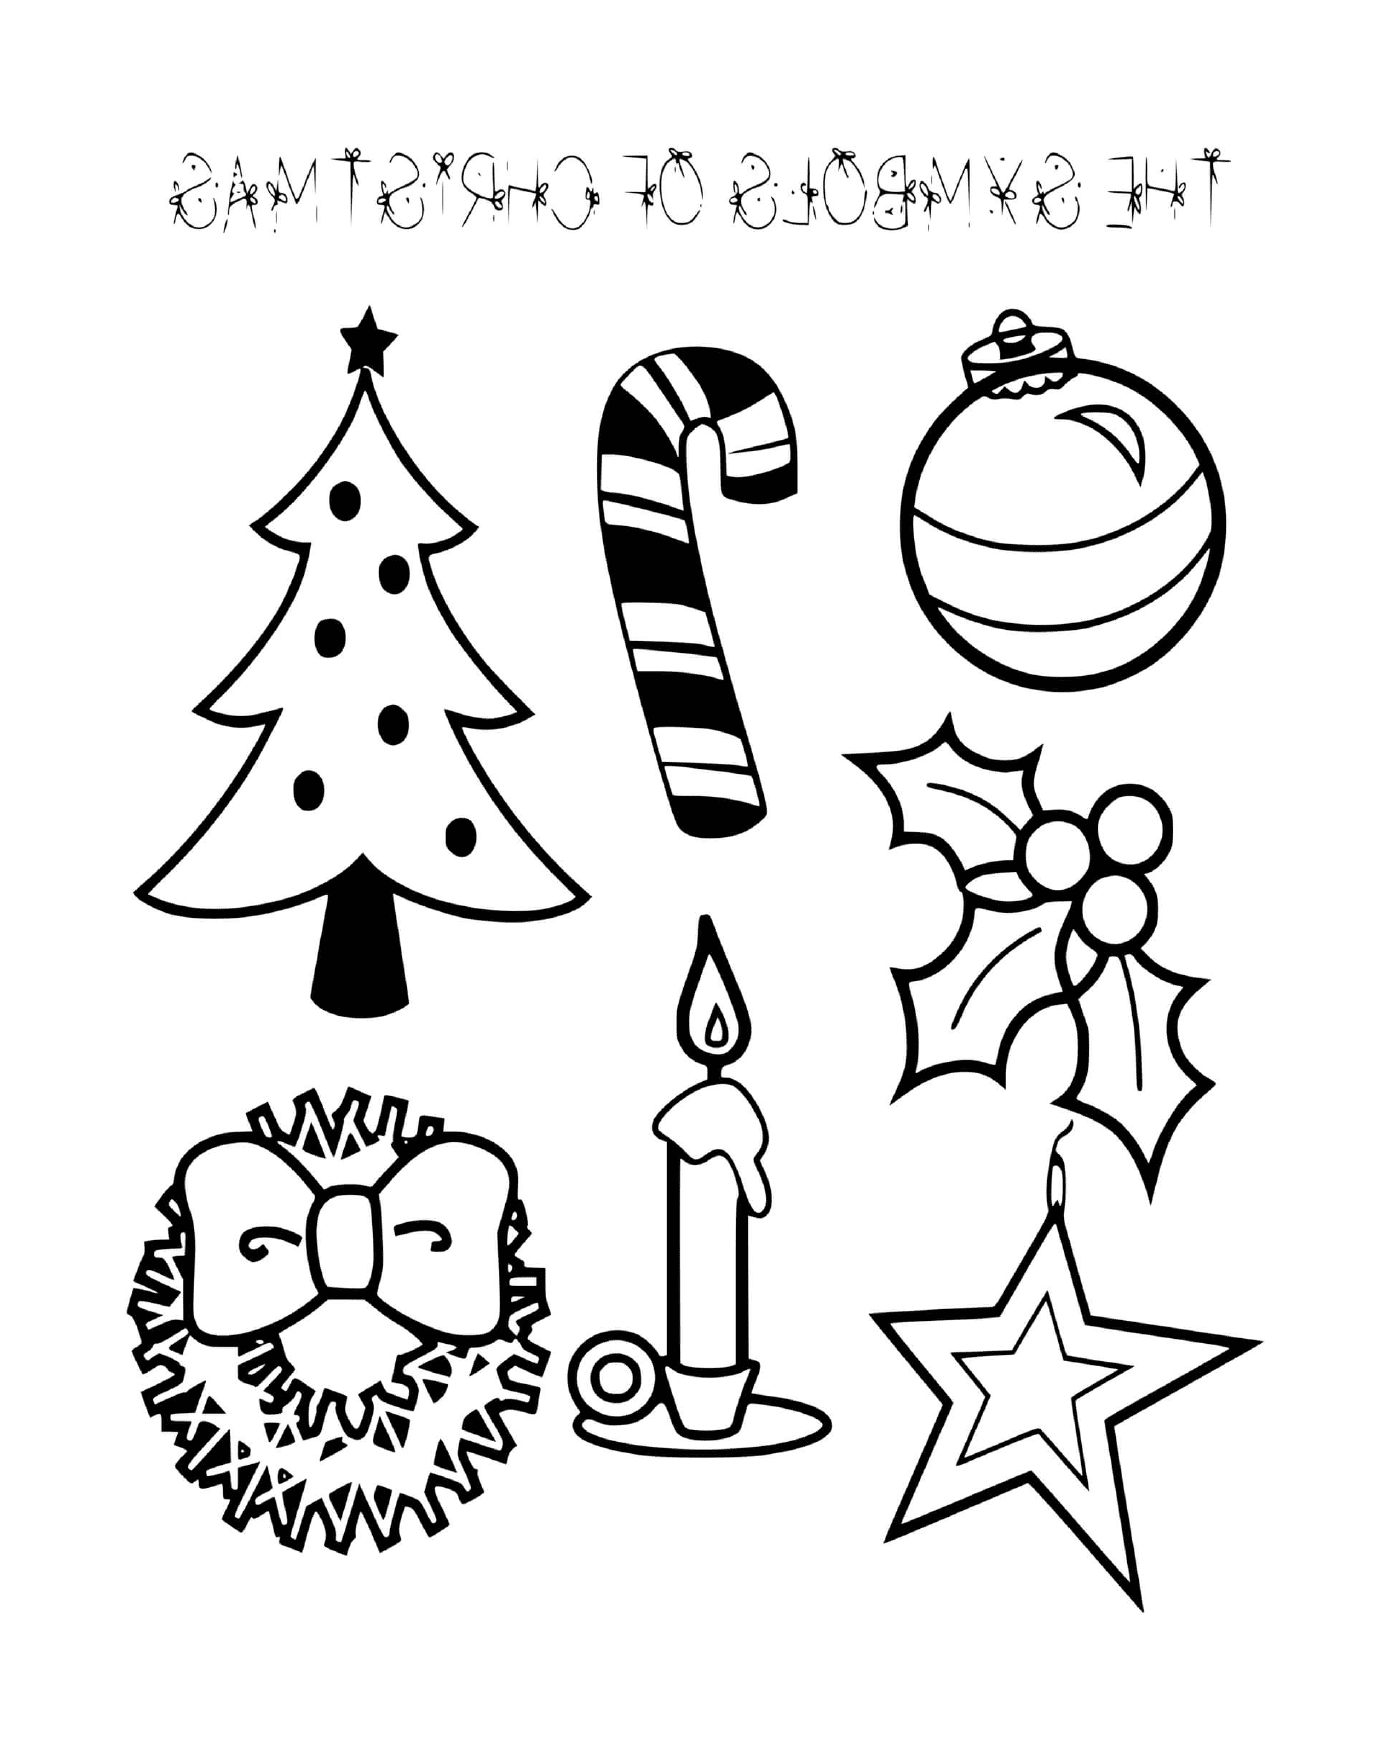  Simboli natalizi 